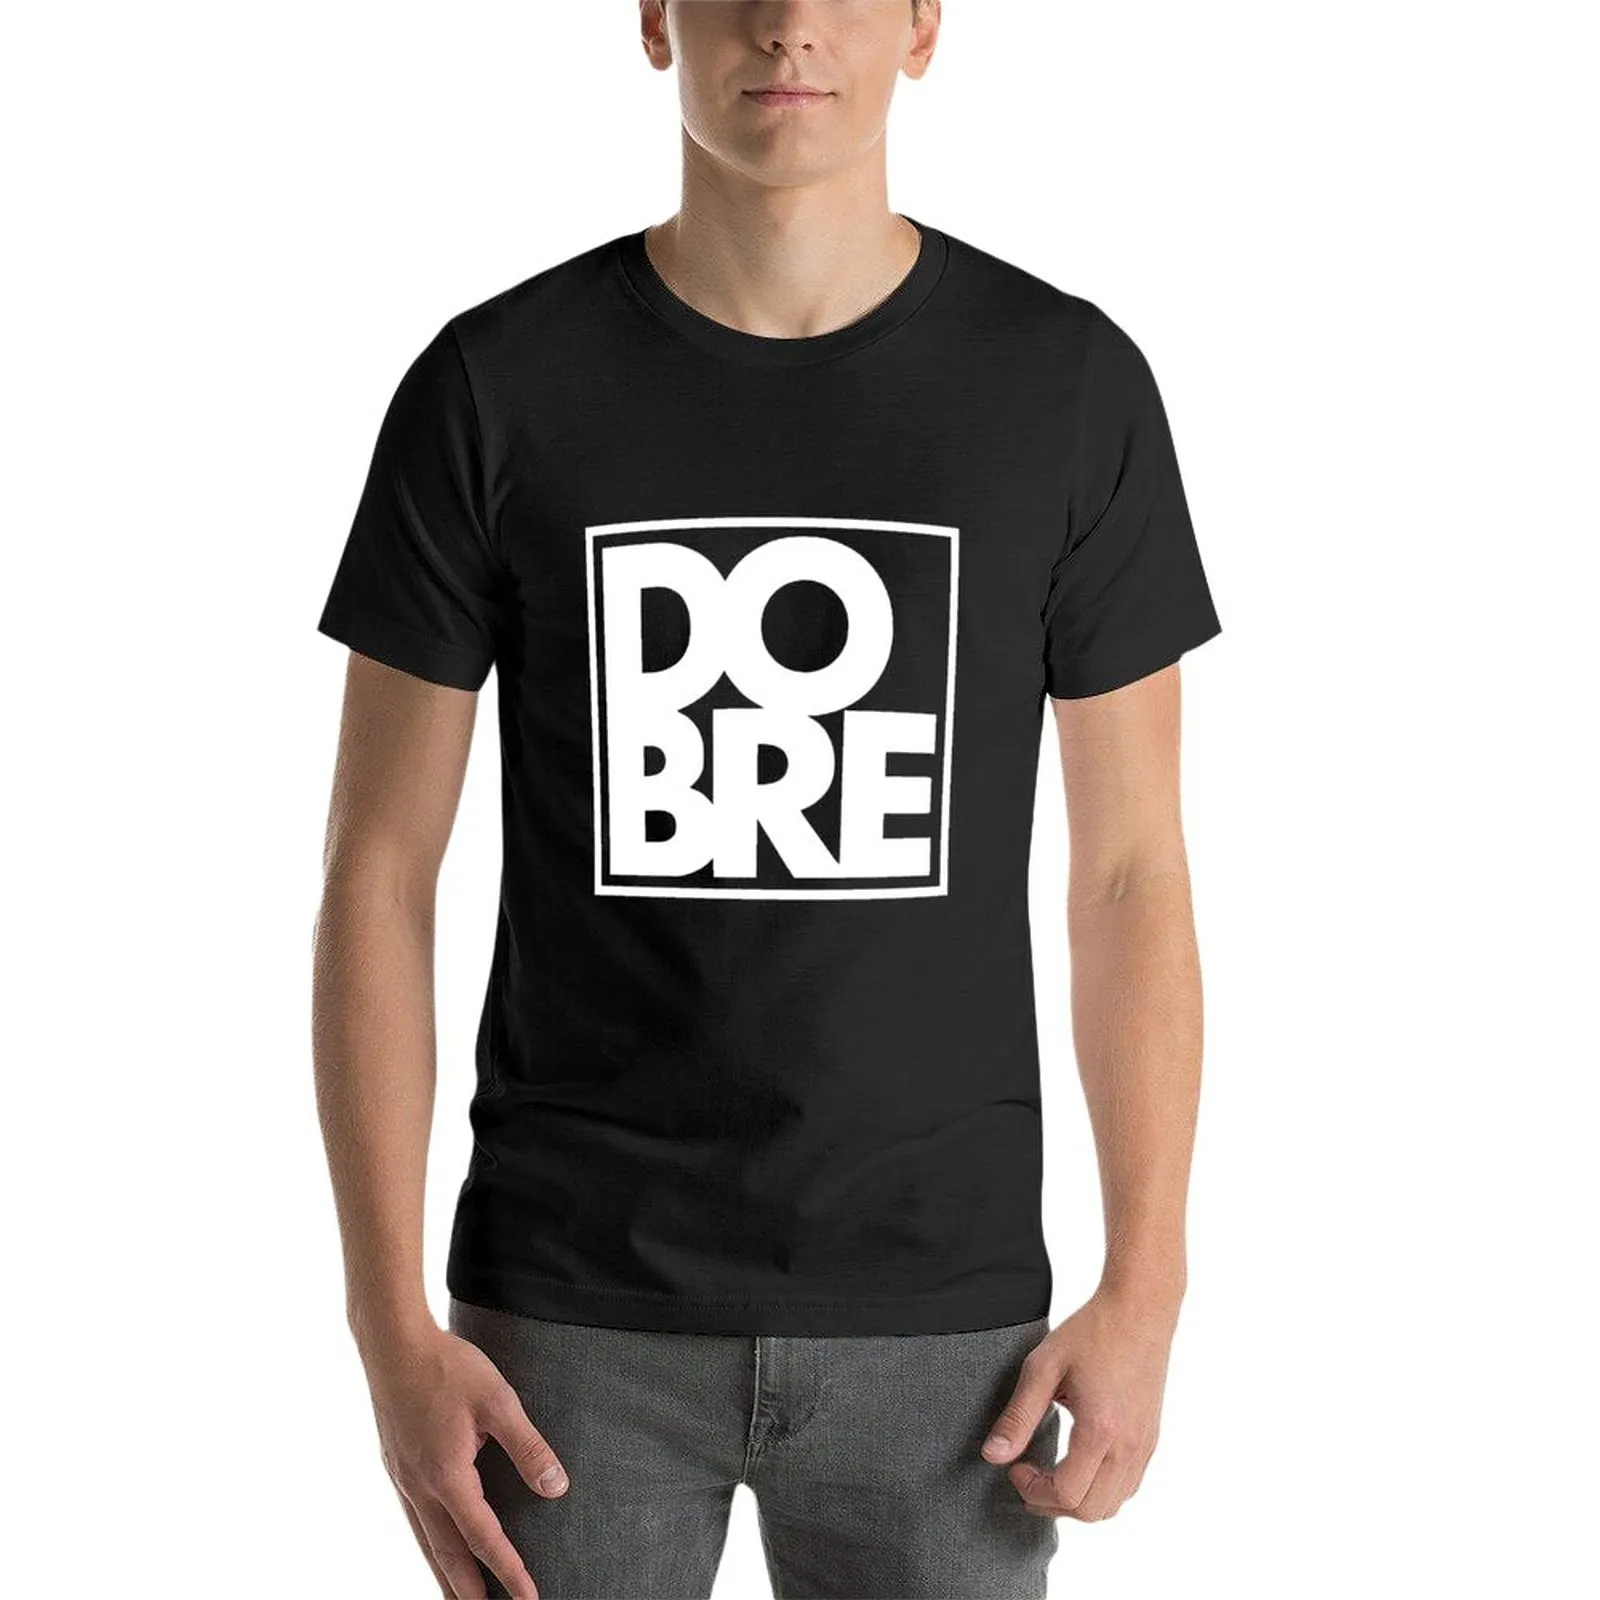 S Dobre Brothers Logo, Dobre Brothers Merch T-shirt Plus taille T-shirts Funny T-shirt kawaii vêtements Sweet Shirts, hommes